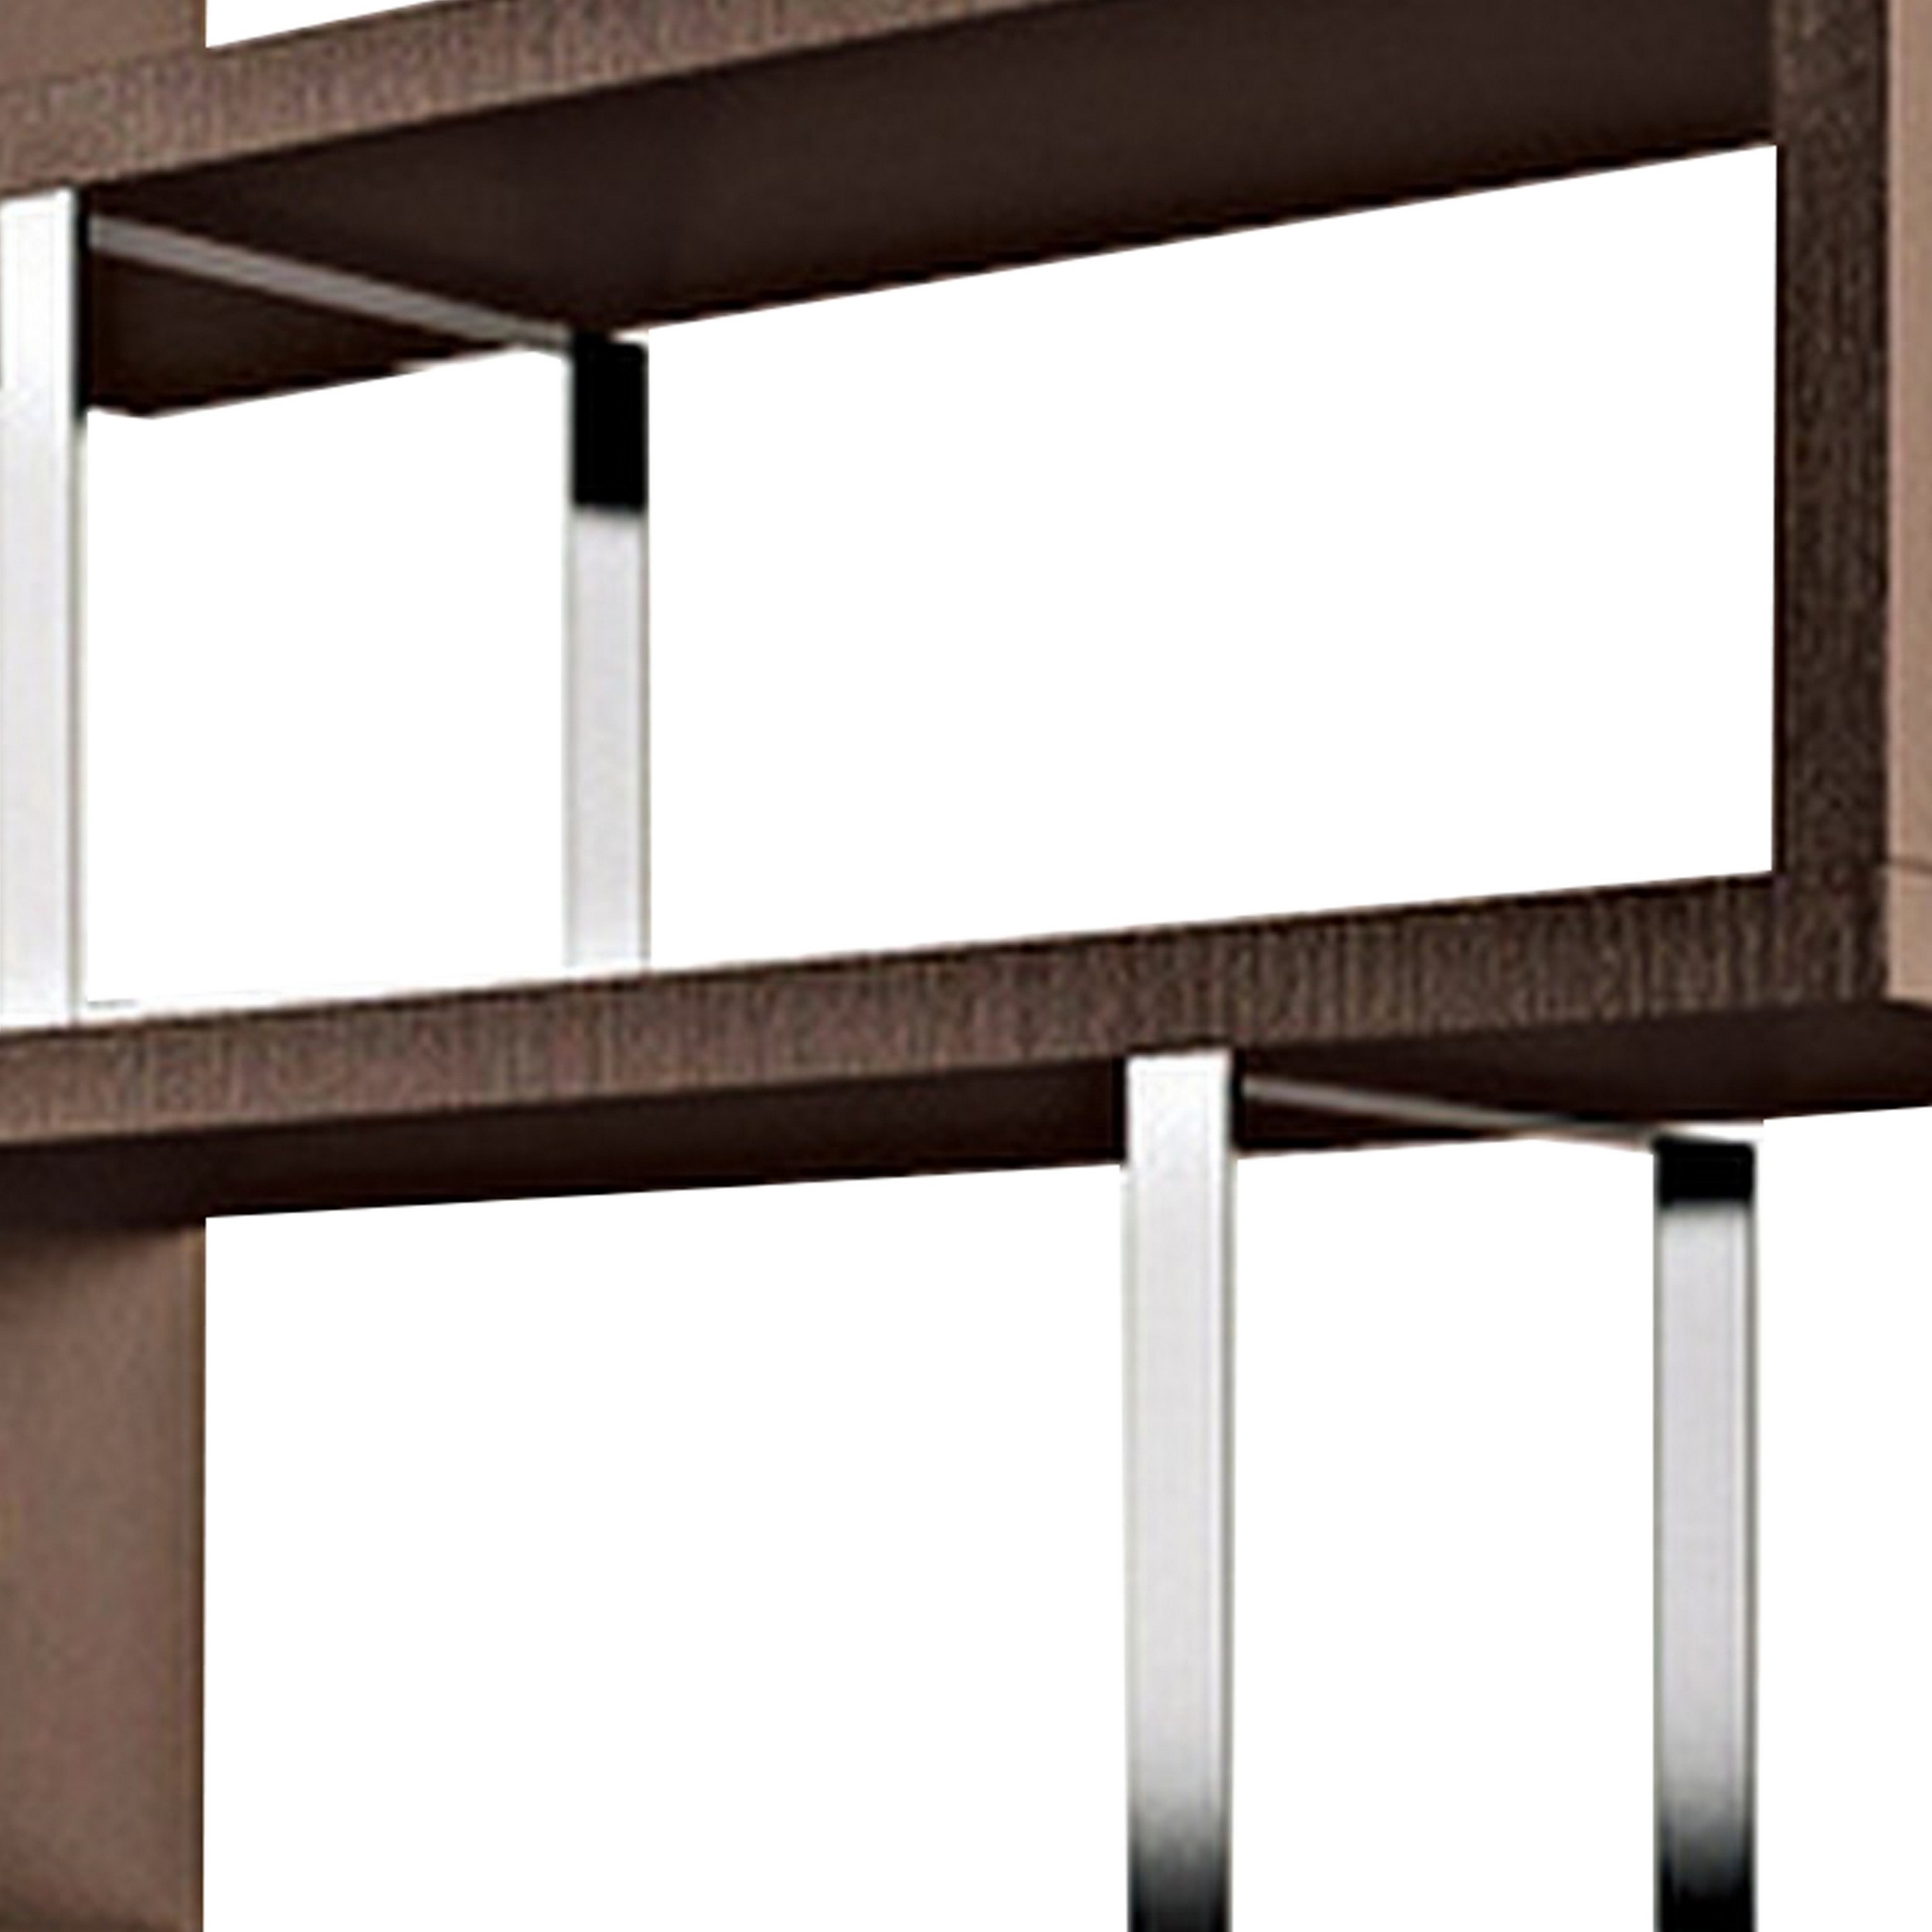 Gina 67 Inch Modern Bookshelf, 4 Tier Alternating S Shape, Brown And Chrome- Saltoro Sherpi